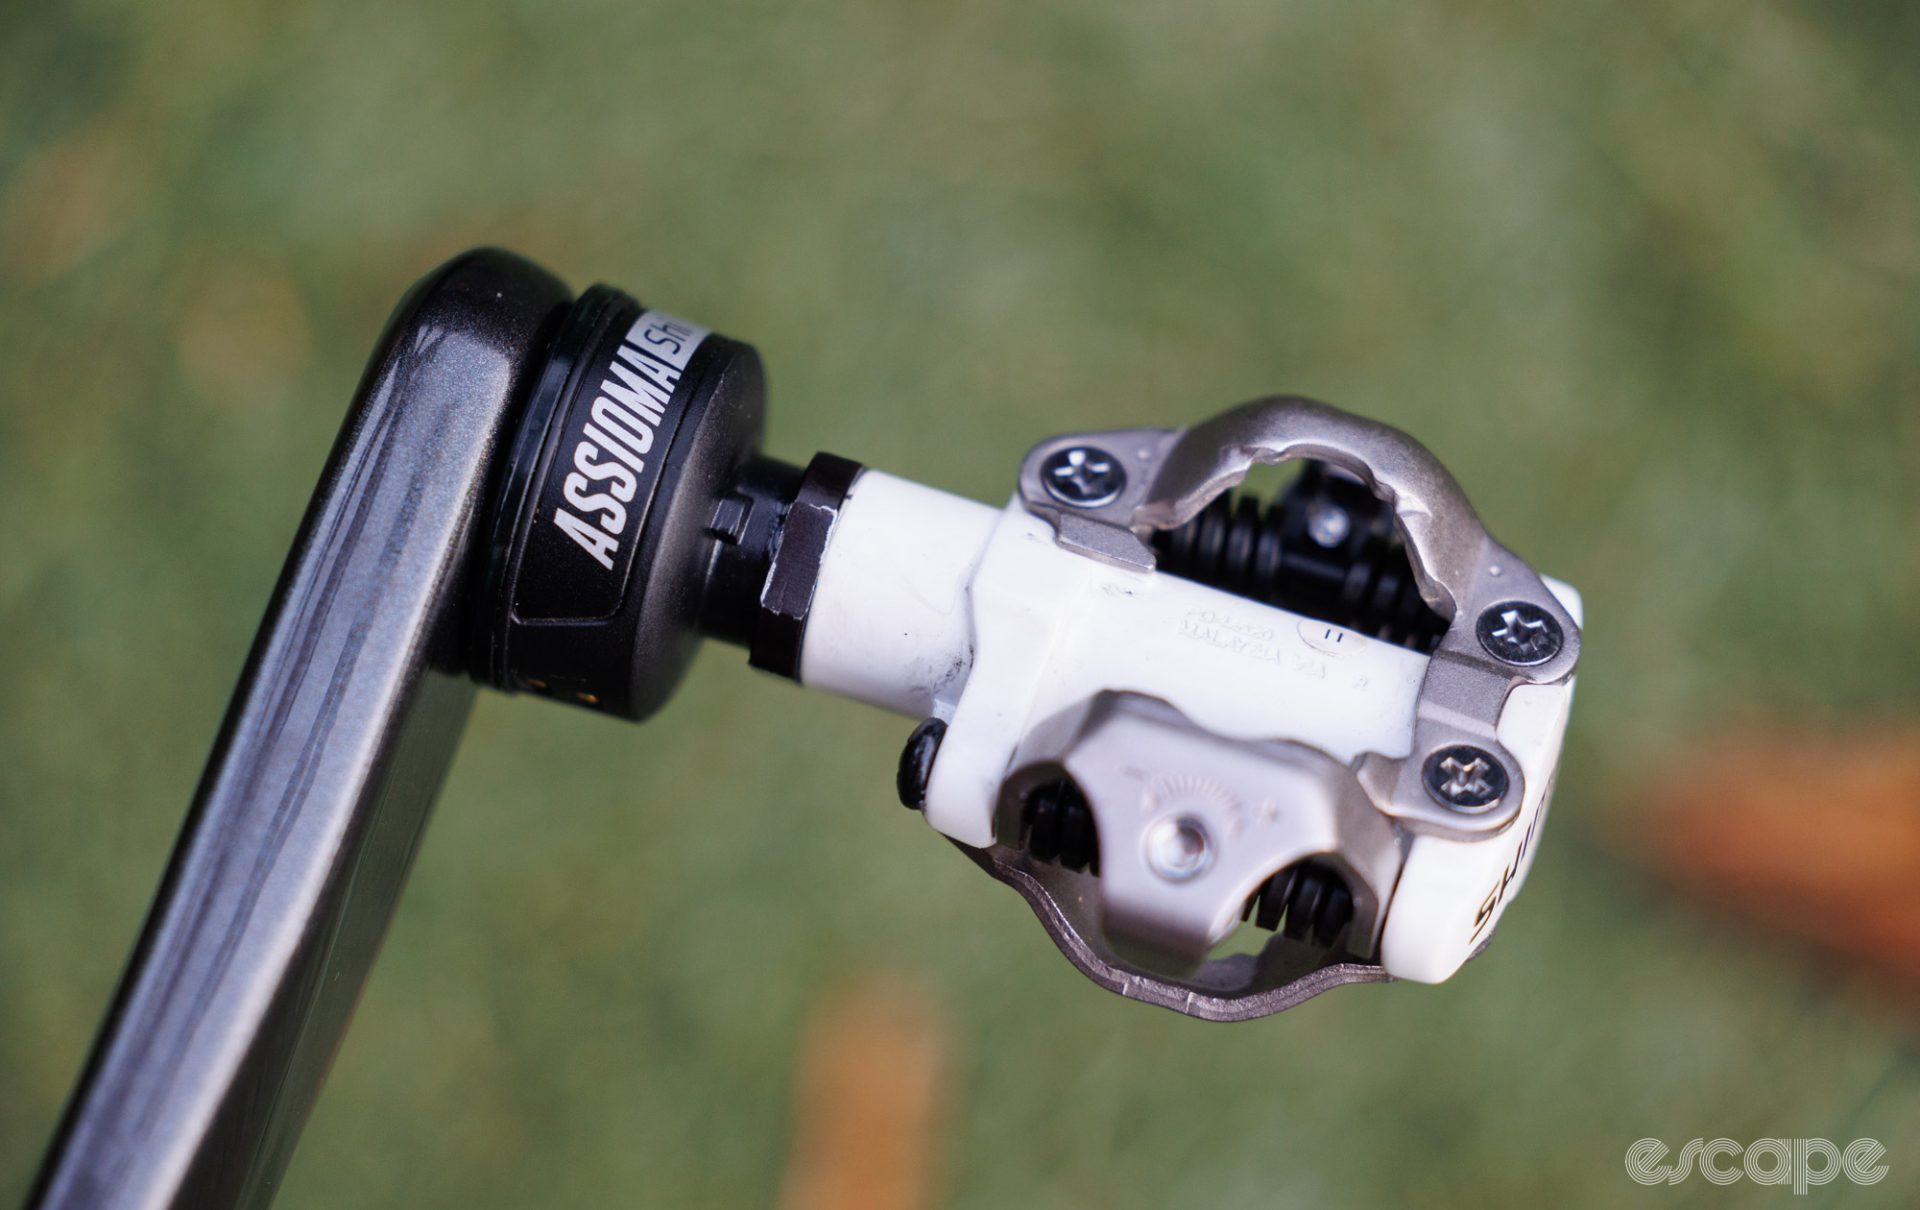 Favero Assioma Shi installed into a Shimano M520 pedal. 